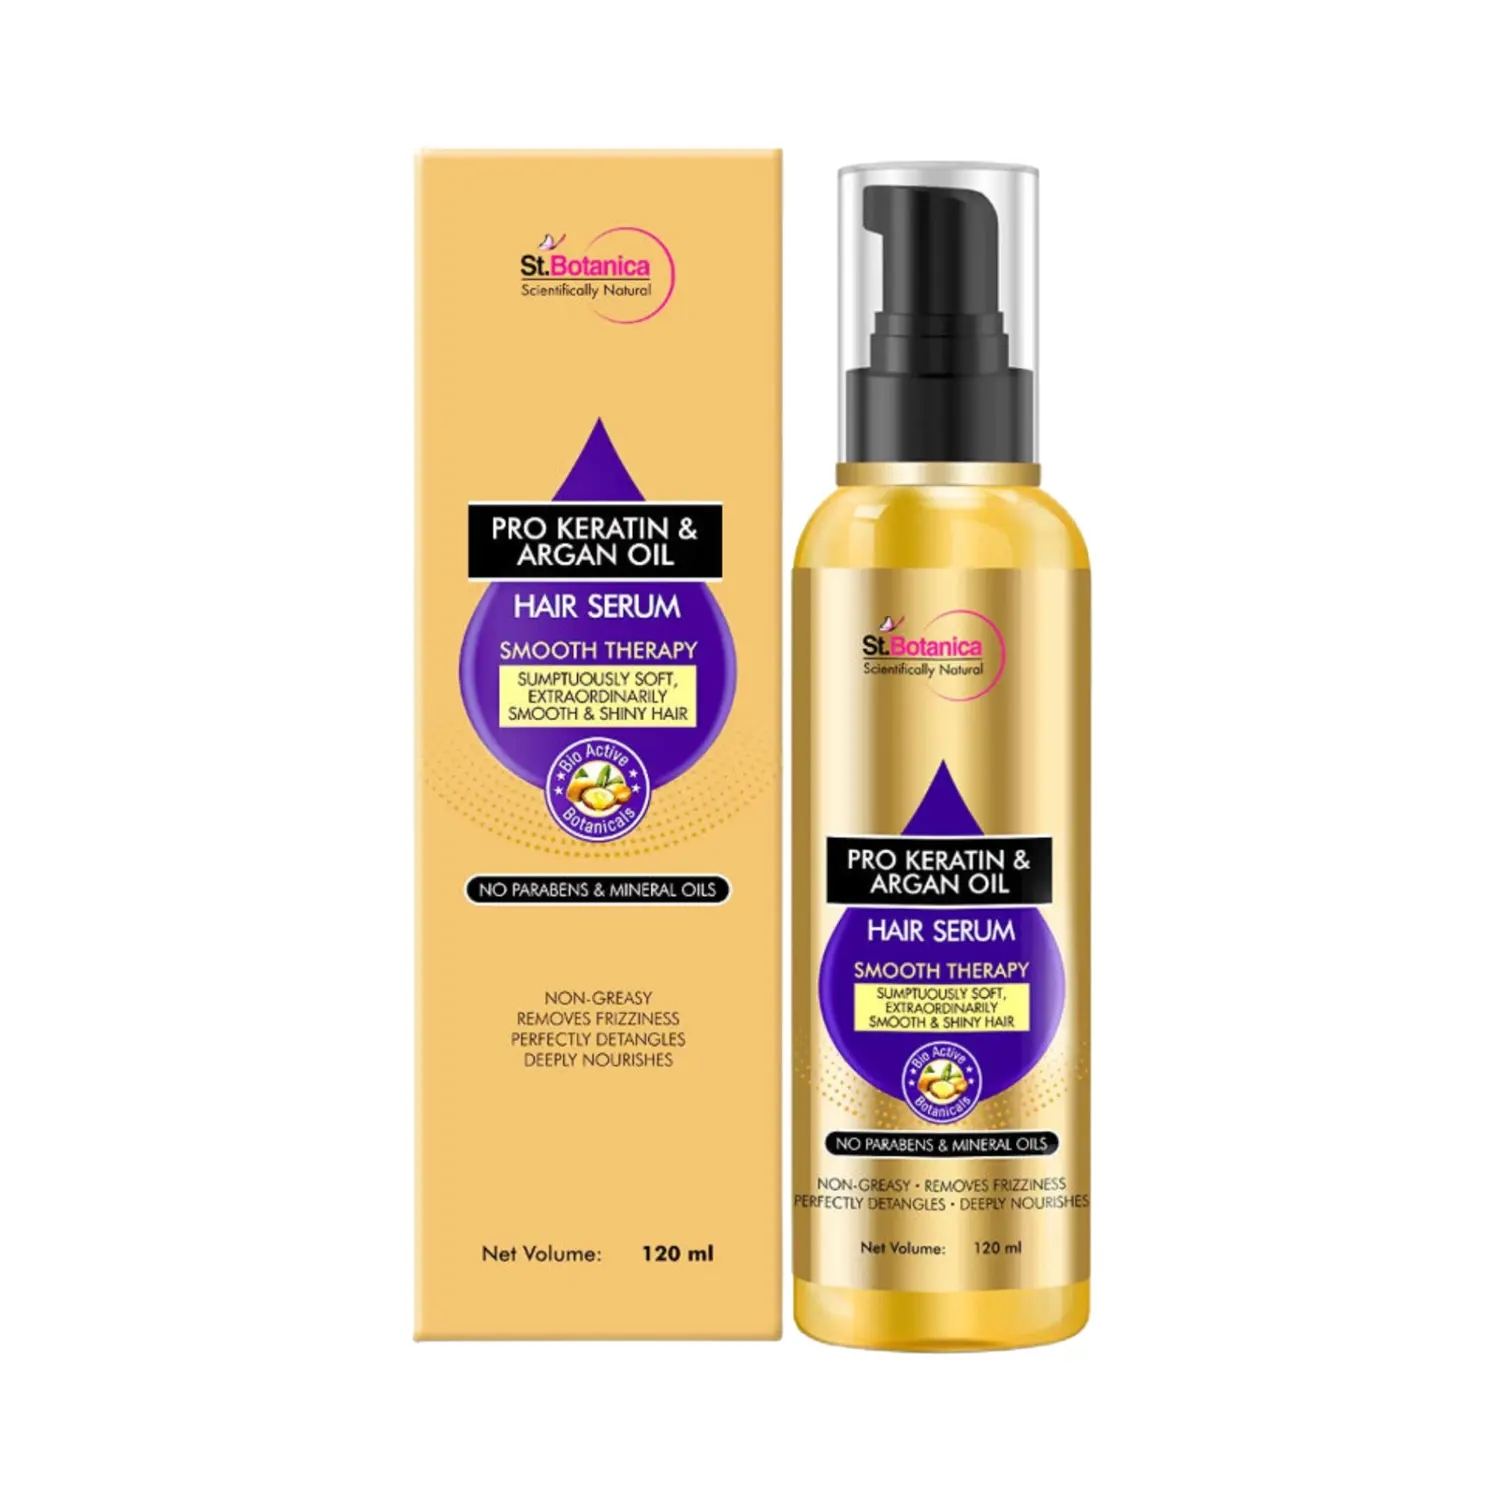 St.Botanica | St.Botanica Pro Keratin & Argan Oil Smooth Therapy Hair Serum (120ml)